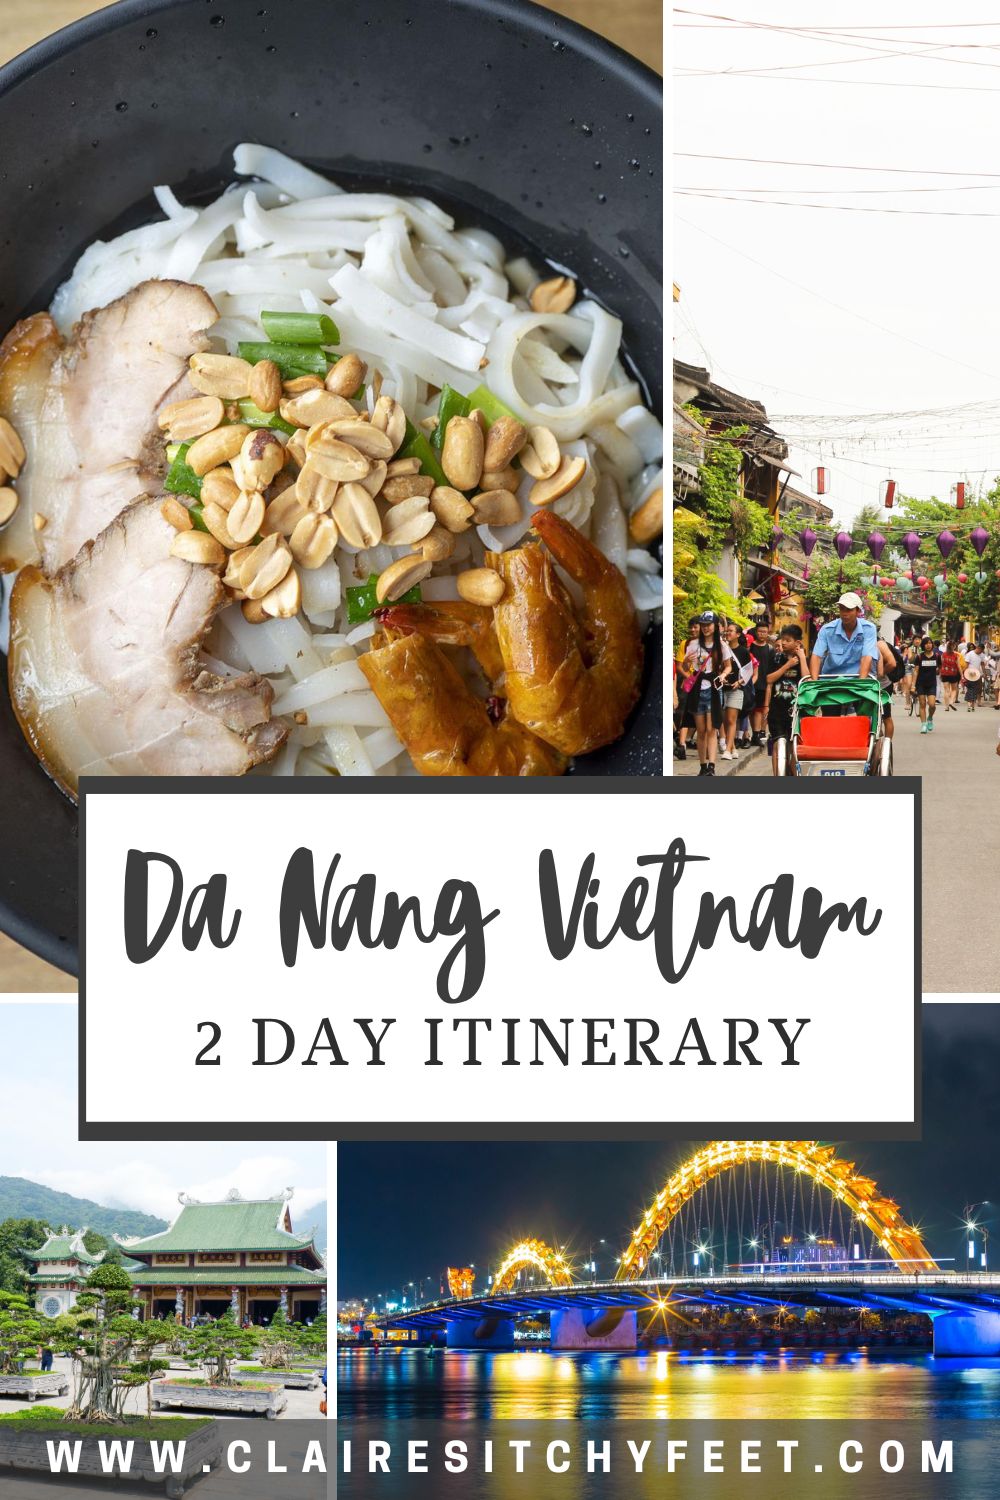 da nang vietnam itinerary,Da Nang Vietnam 2 Day Itinerary,da nang,da nang vietnam,da nang travel,da nang vietnal travel